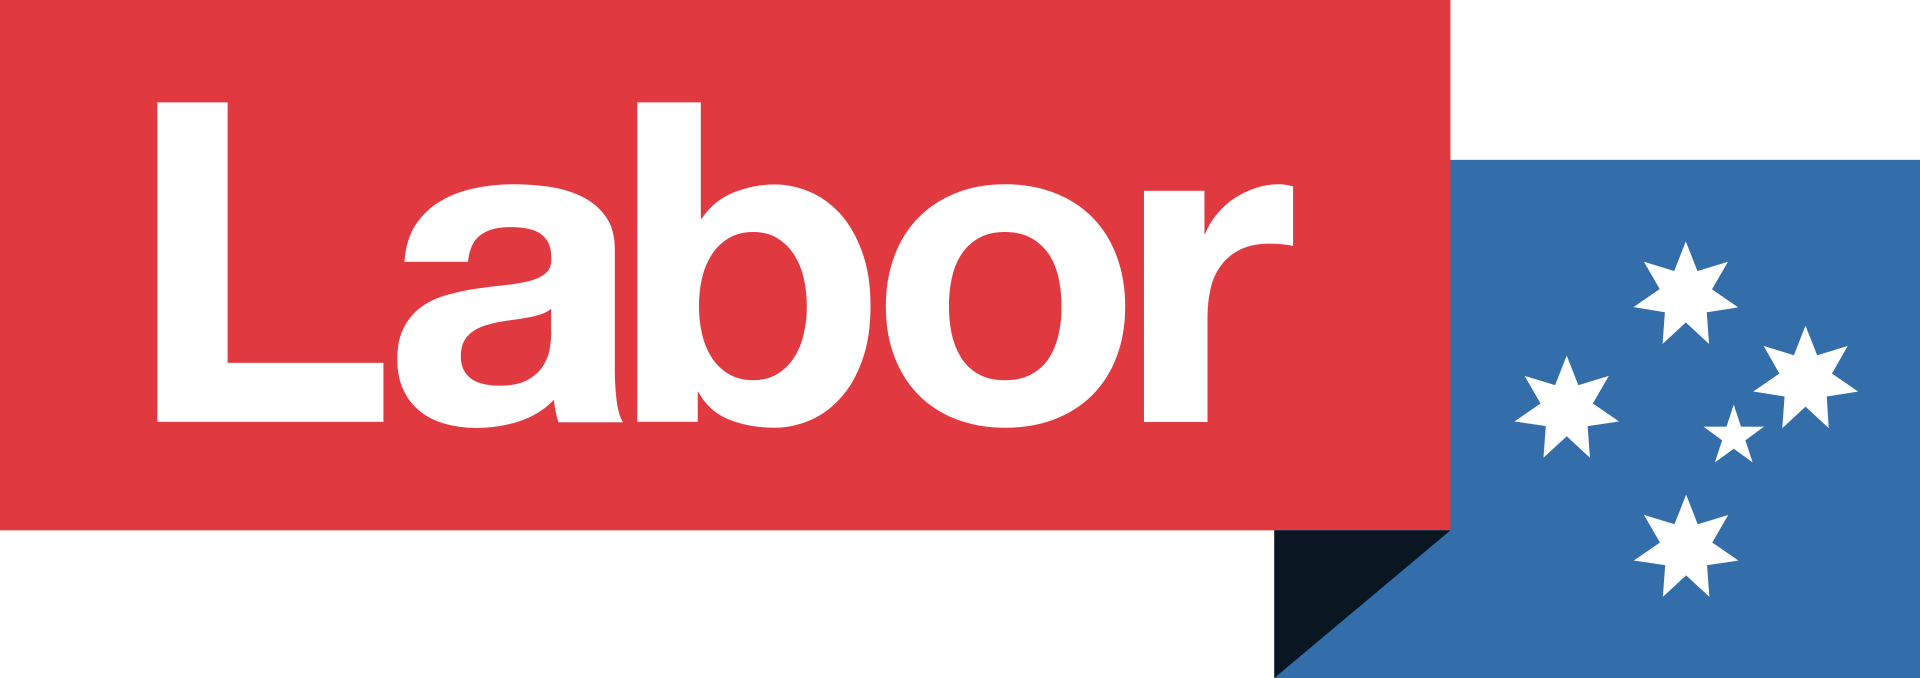 Australian Labor Party logo